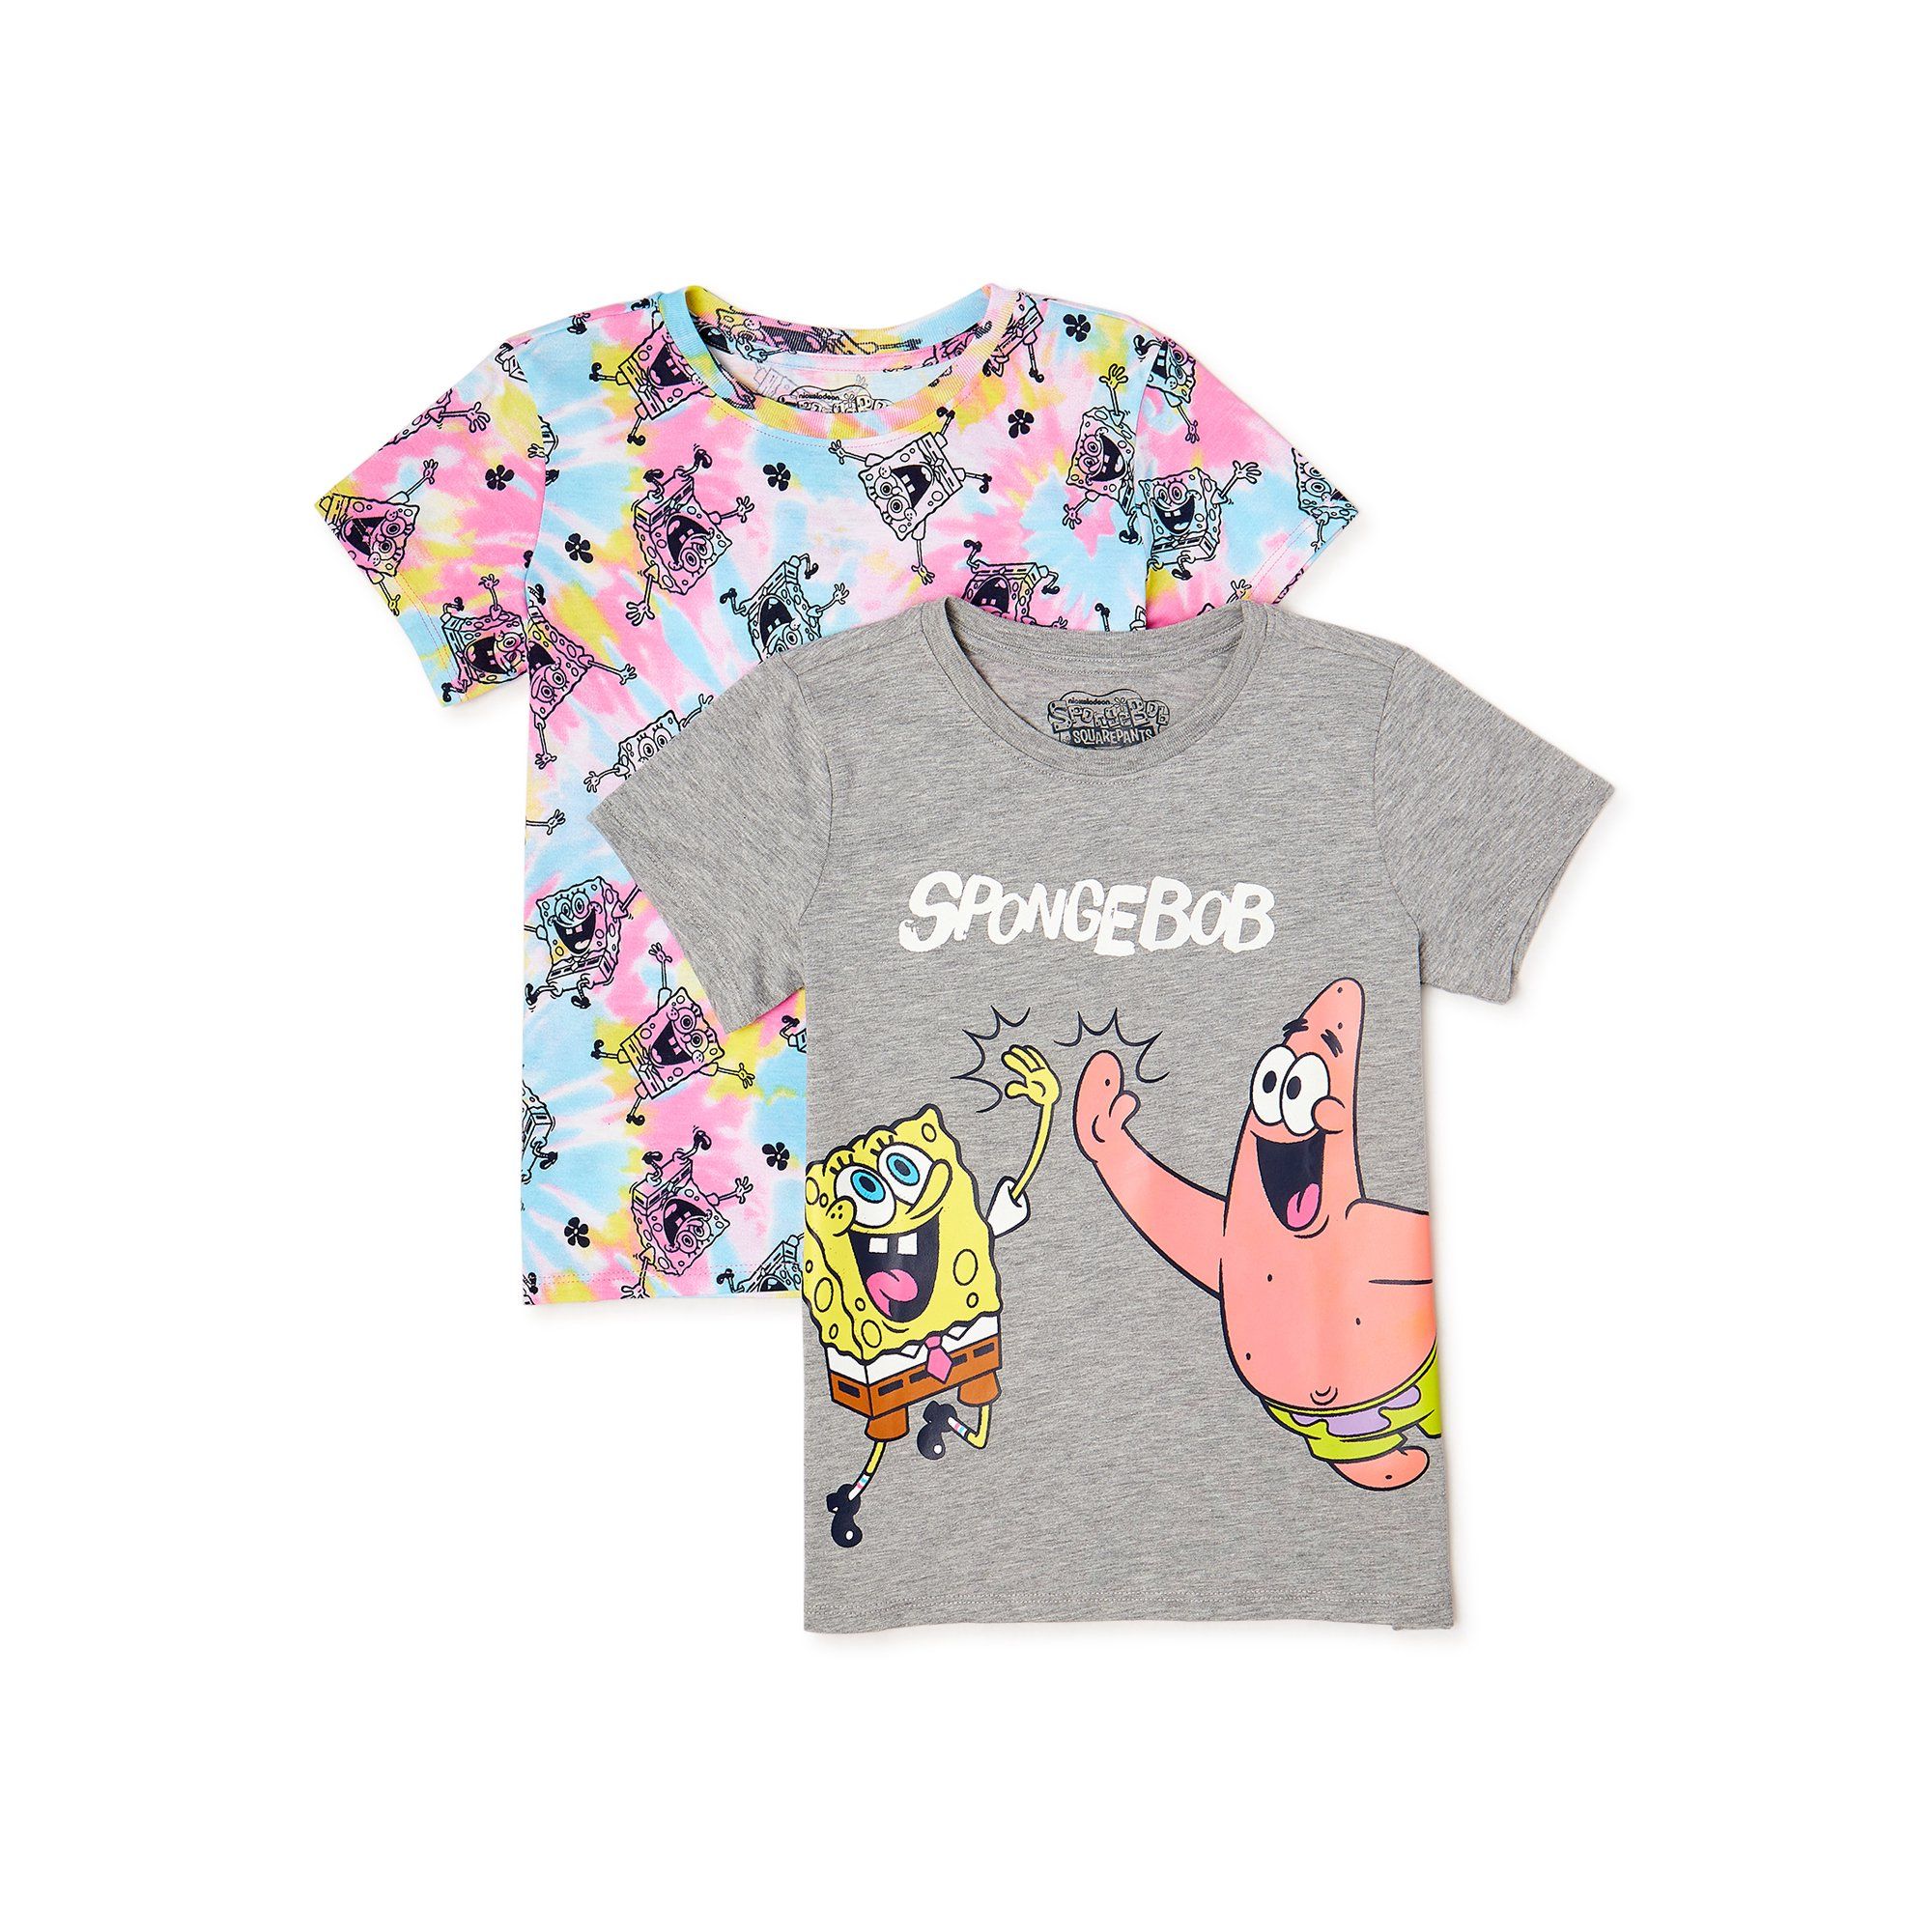 Spongebob Squarepants Girls Graphic T-Shirts, 2-Pack, Sizes 4-18 & Plus | Walmart (US)